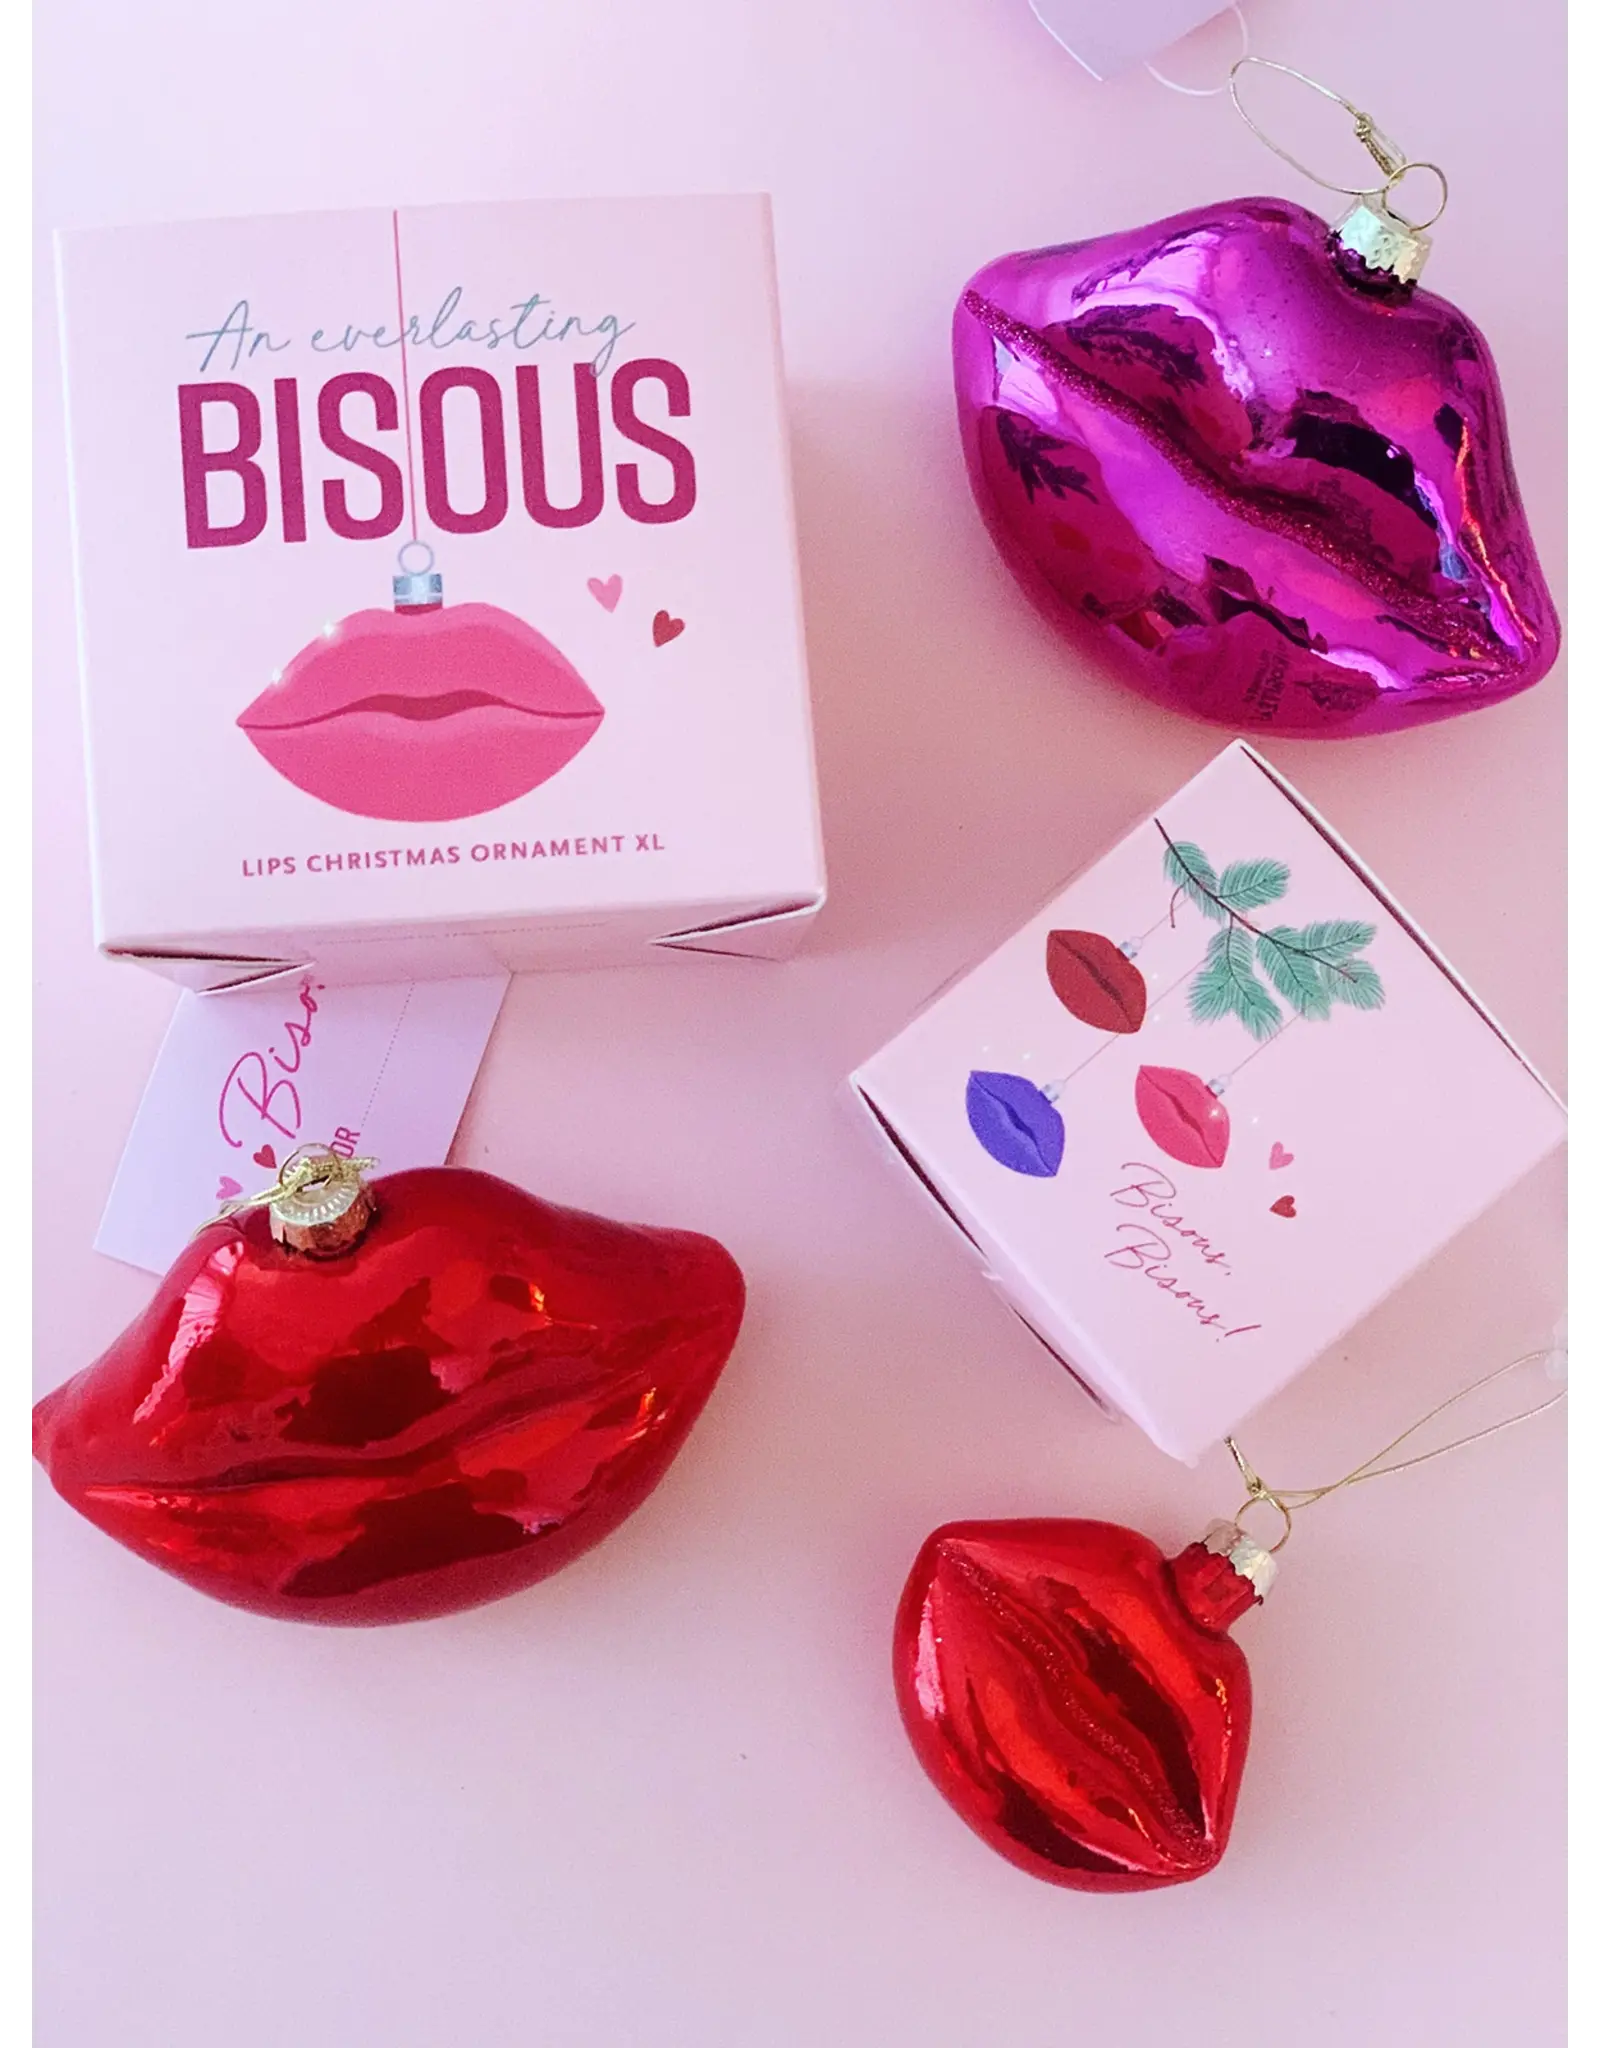 Bisous Lips Christmas Ornament L